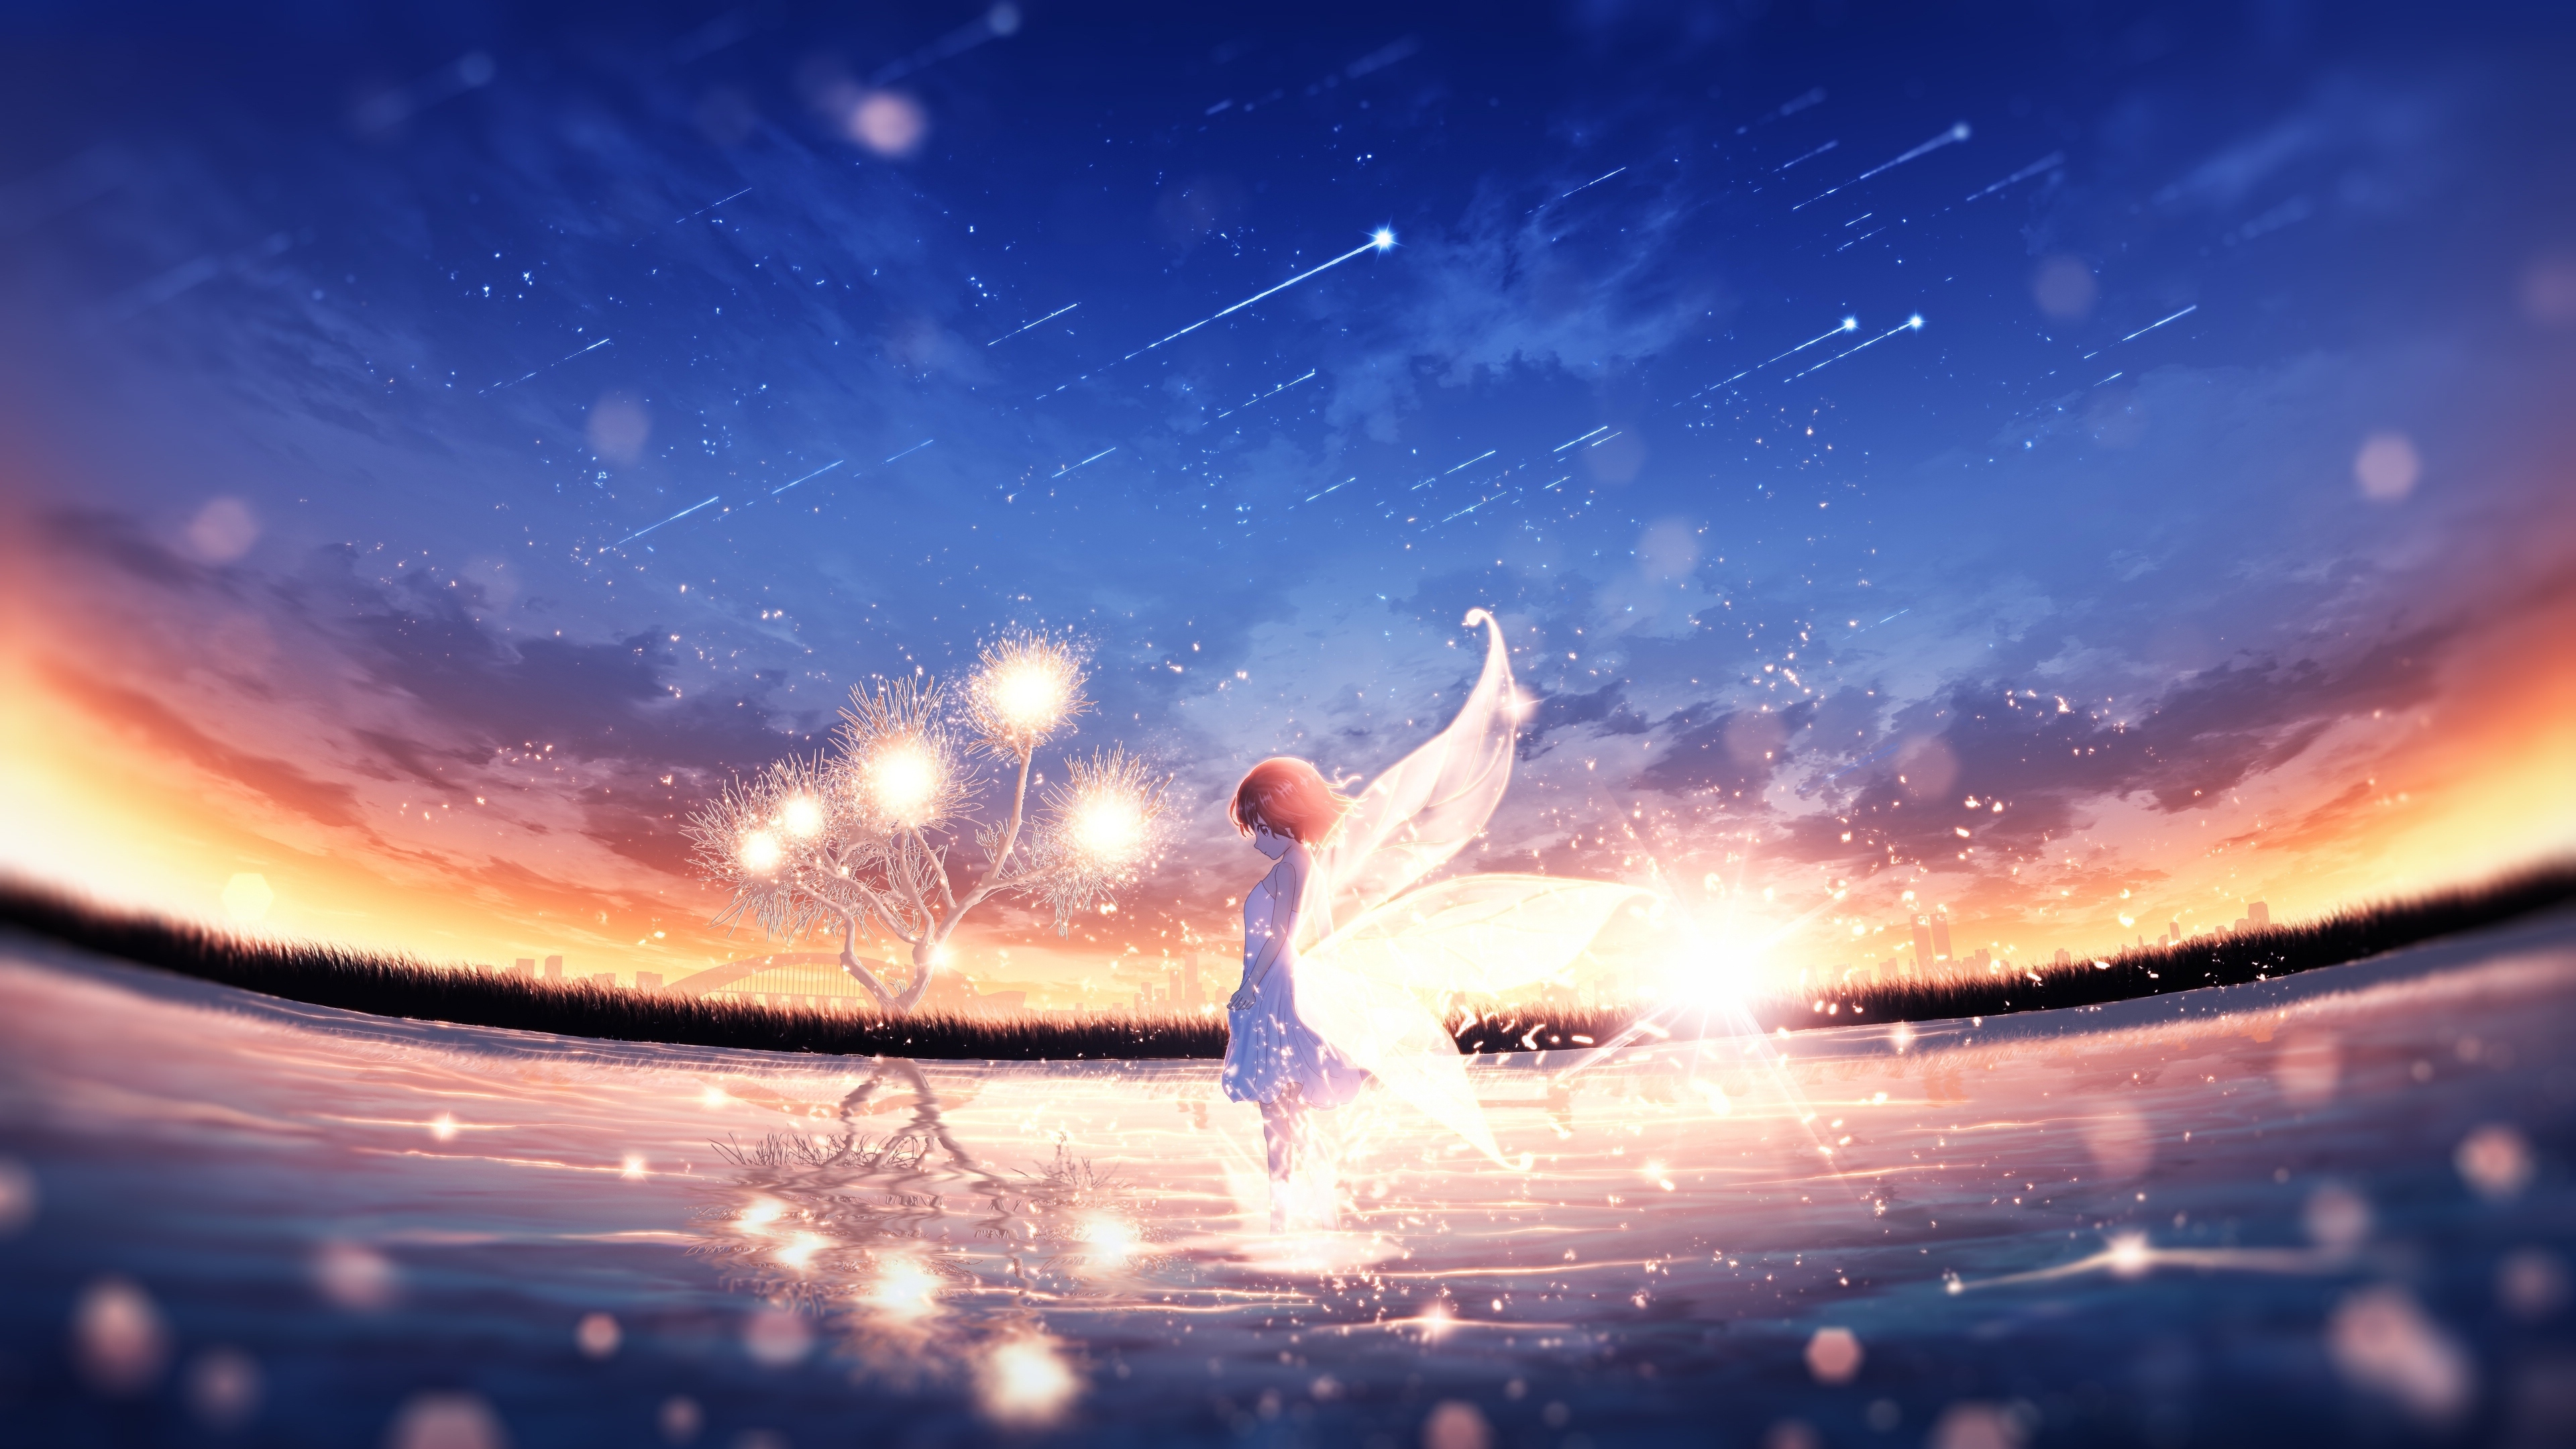 Wallpaper Profile View, Sunset, Anime Fairy Girl, Scenic, Falling Stars, Wings, Anime Landscape:3840x2160